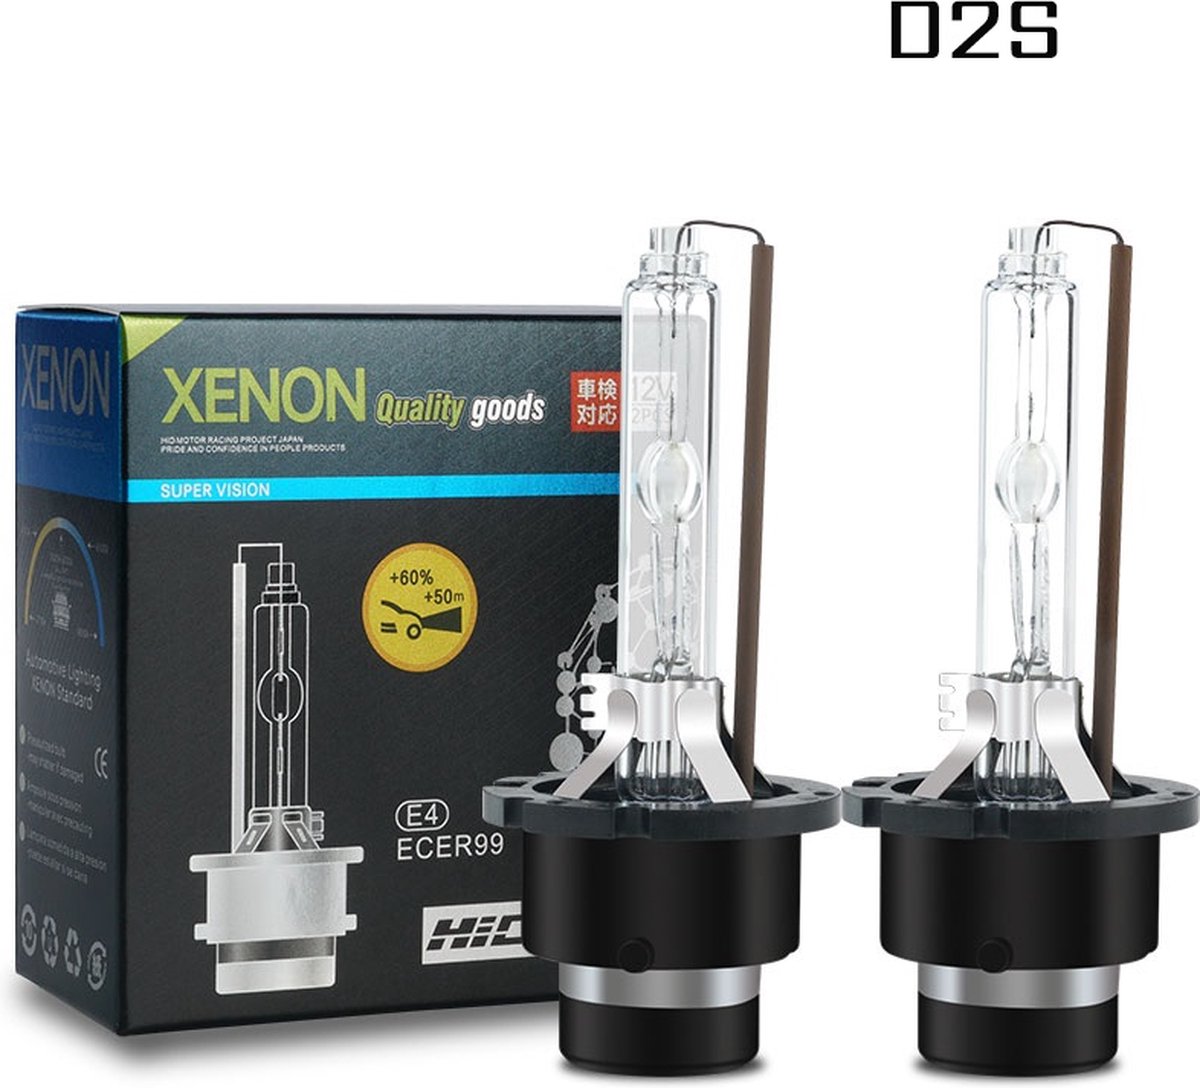 TLVX D2S 35W 12V Origineel Xenon Lampen 12.000K (2 stuks) / Blauw – Paars licht / HID lampen / 35W / Xenon bulbs / Dimlicht / Grootlicht / Hoge Lichtopbrengst / Xenon Koplampen / Auto Lamp / CANBUS / Autolampen / Origineel D2S Xenon (2 stuks)